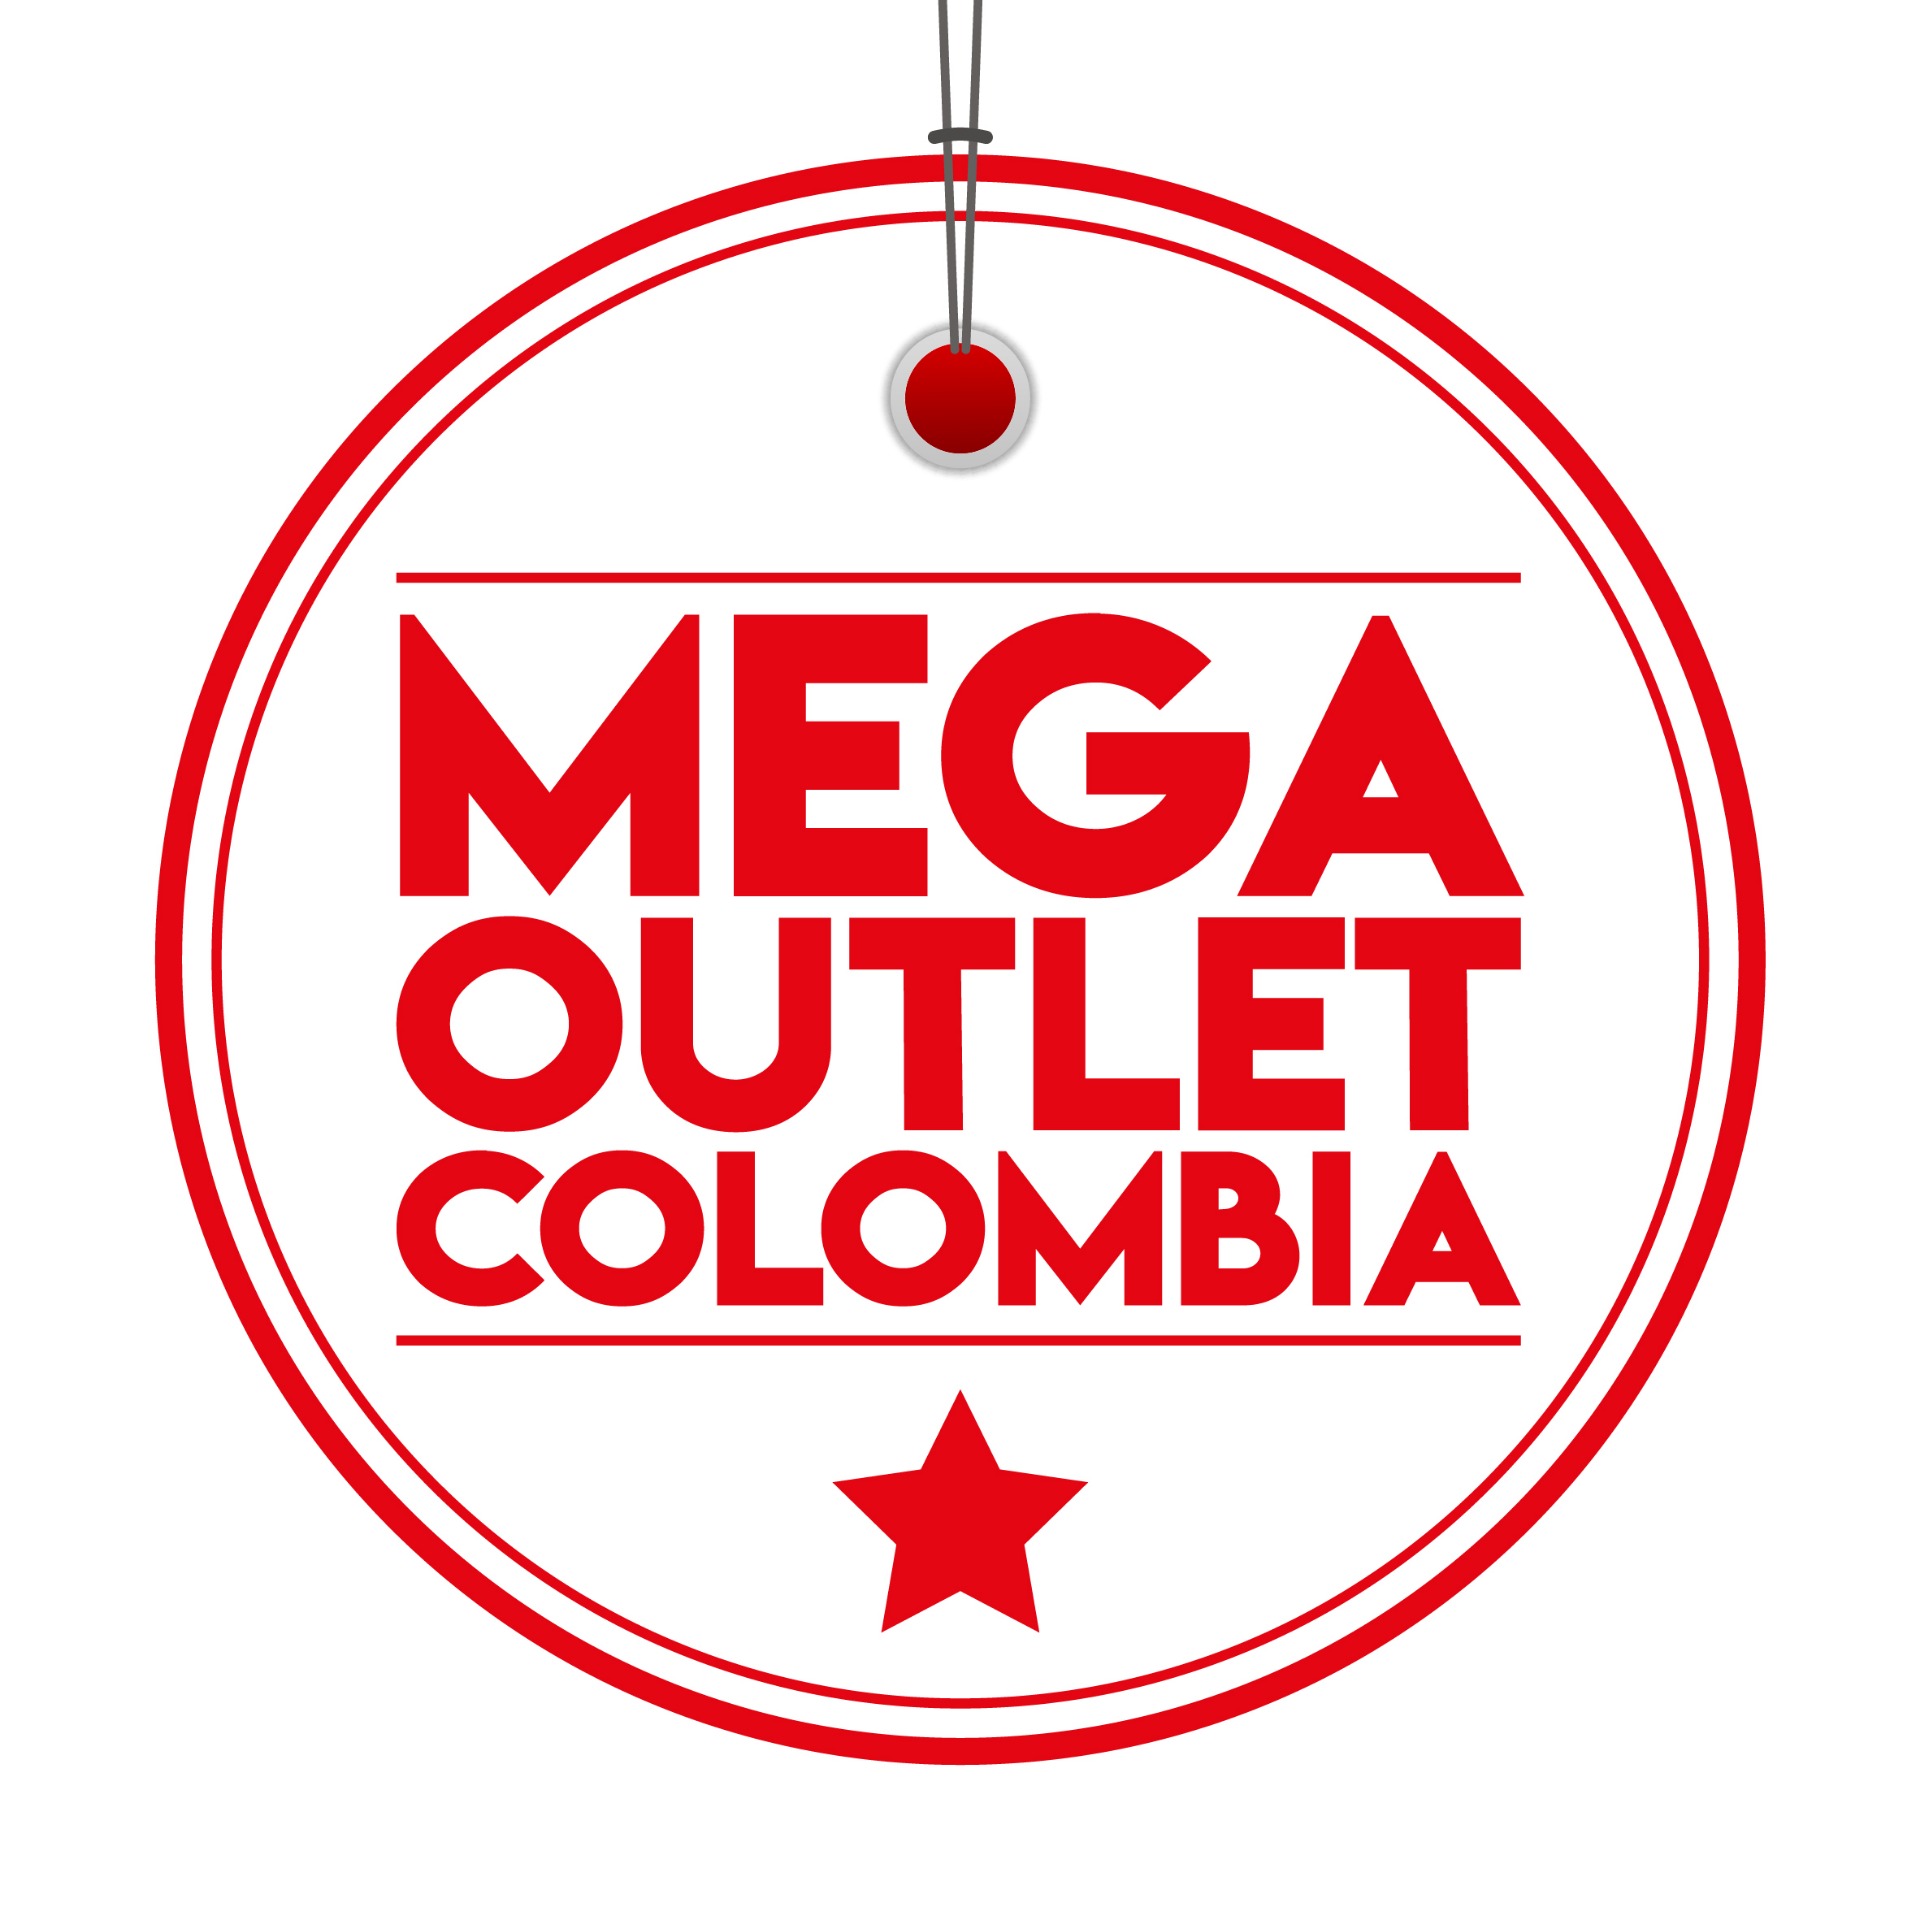 MEGA OUTLET COLOMBIA